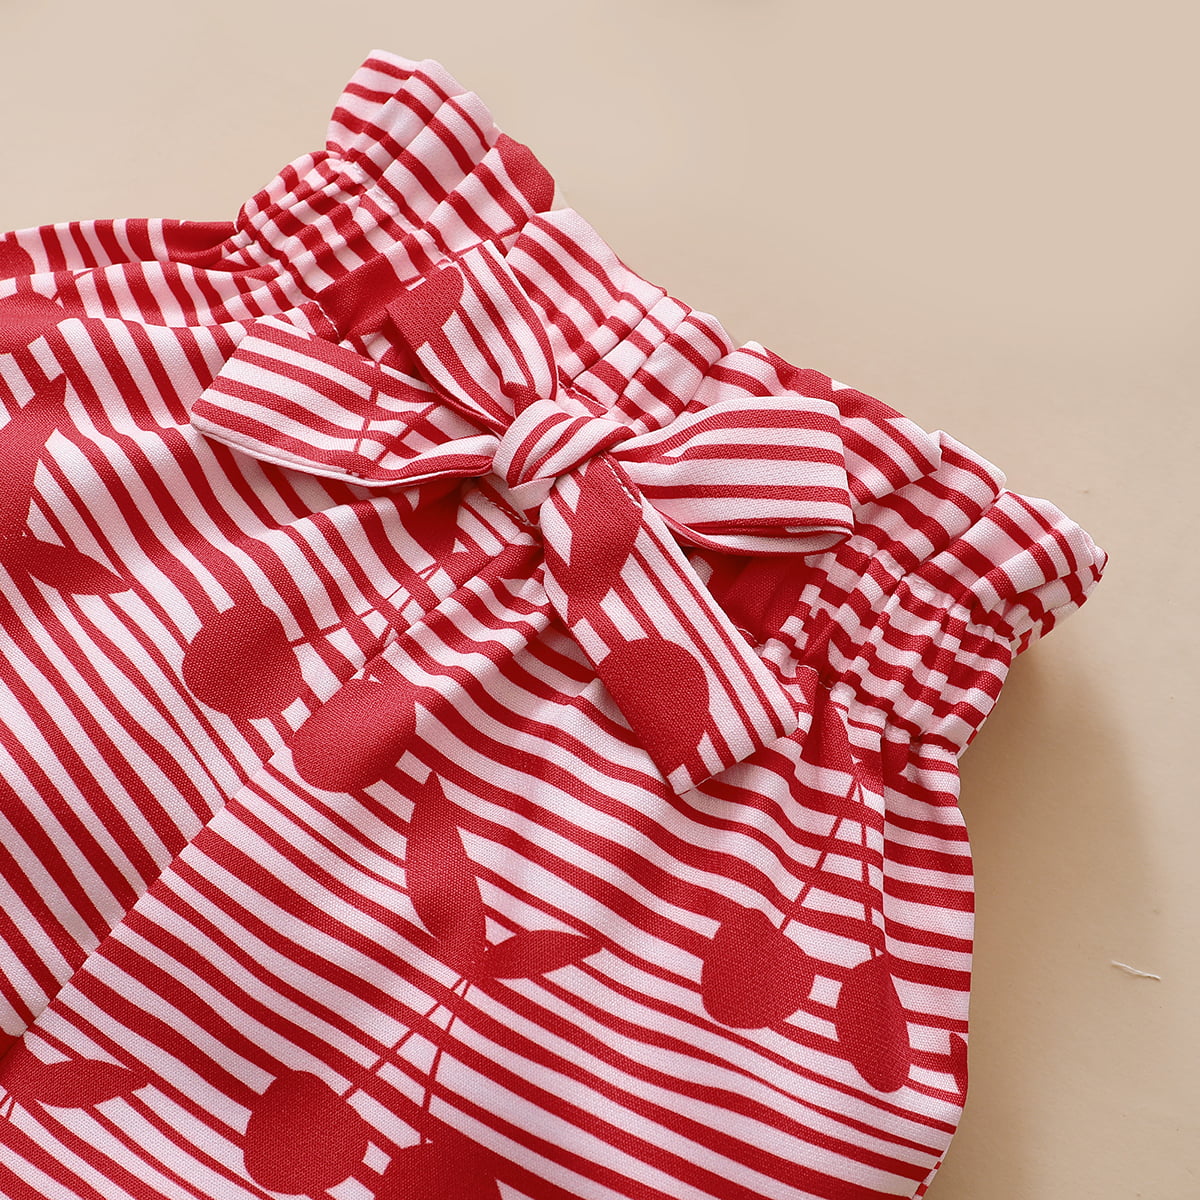 Lykmera Toddler Girls Fashion Summer Suspender Tops Vest Striped Pants 2PCS  Outfits Clothes Set for Girls (Black, 18-24 Months)